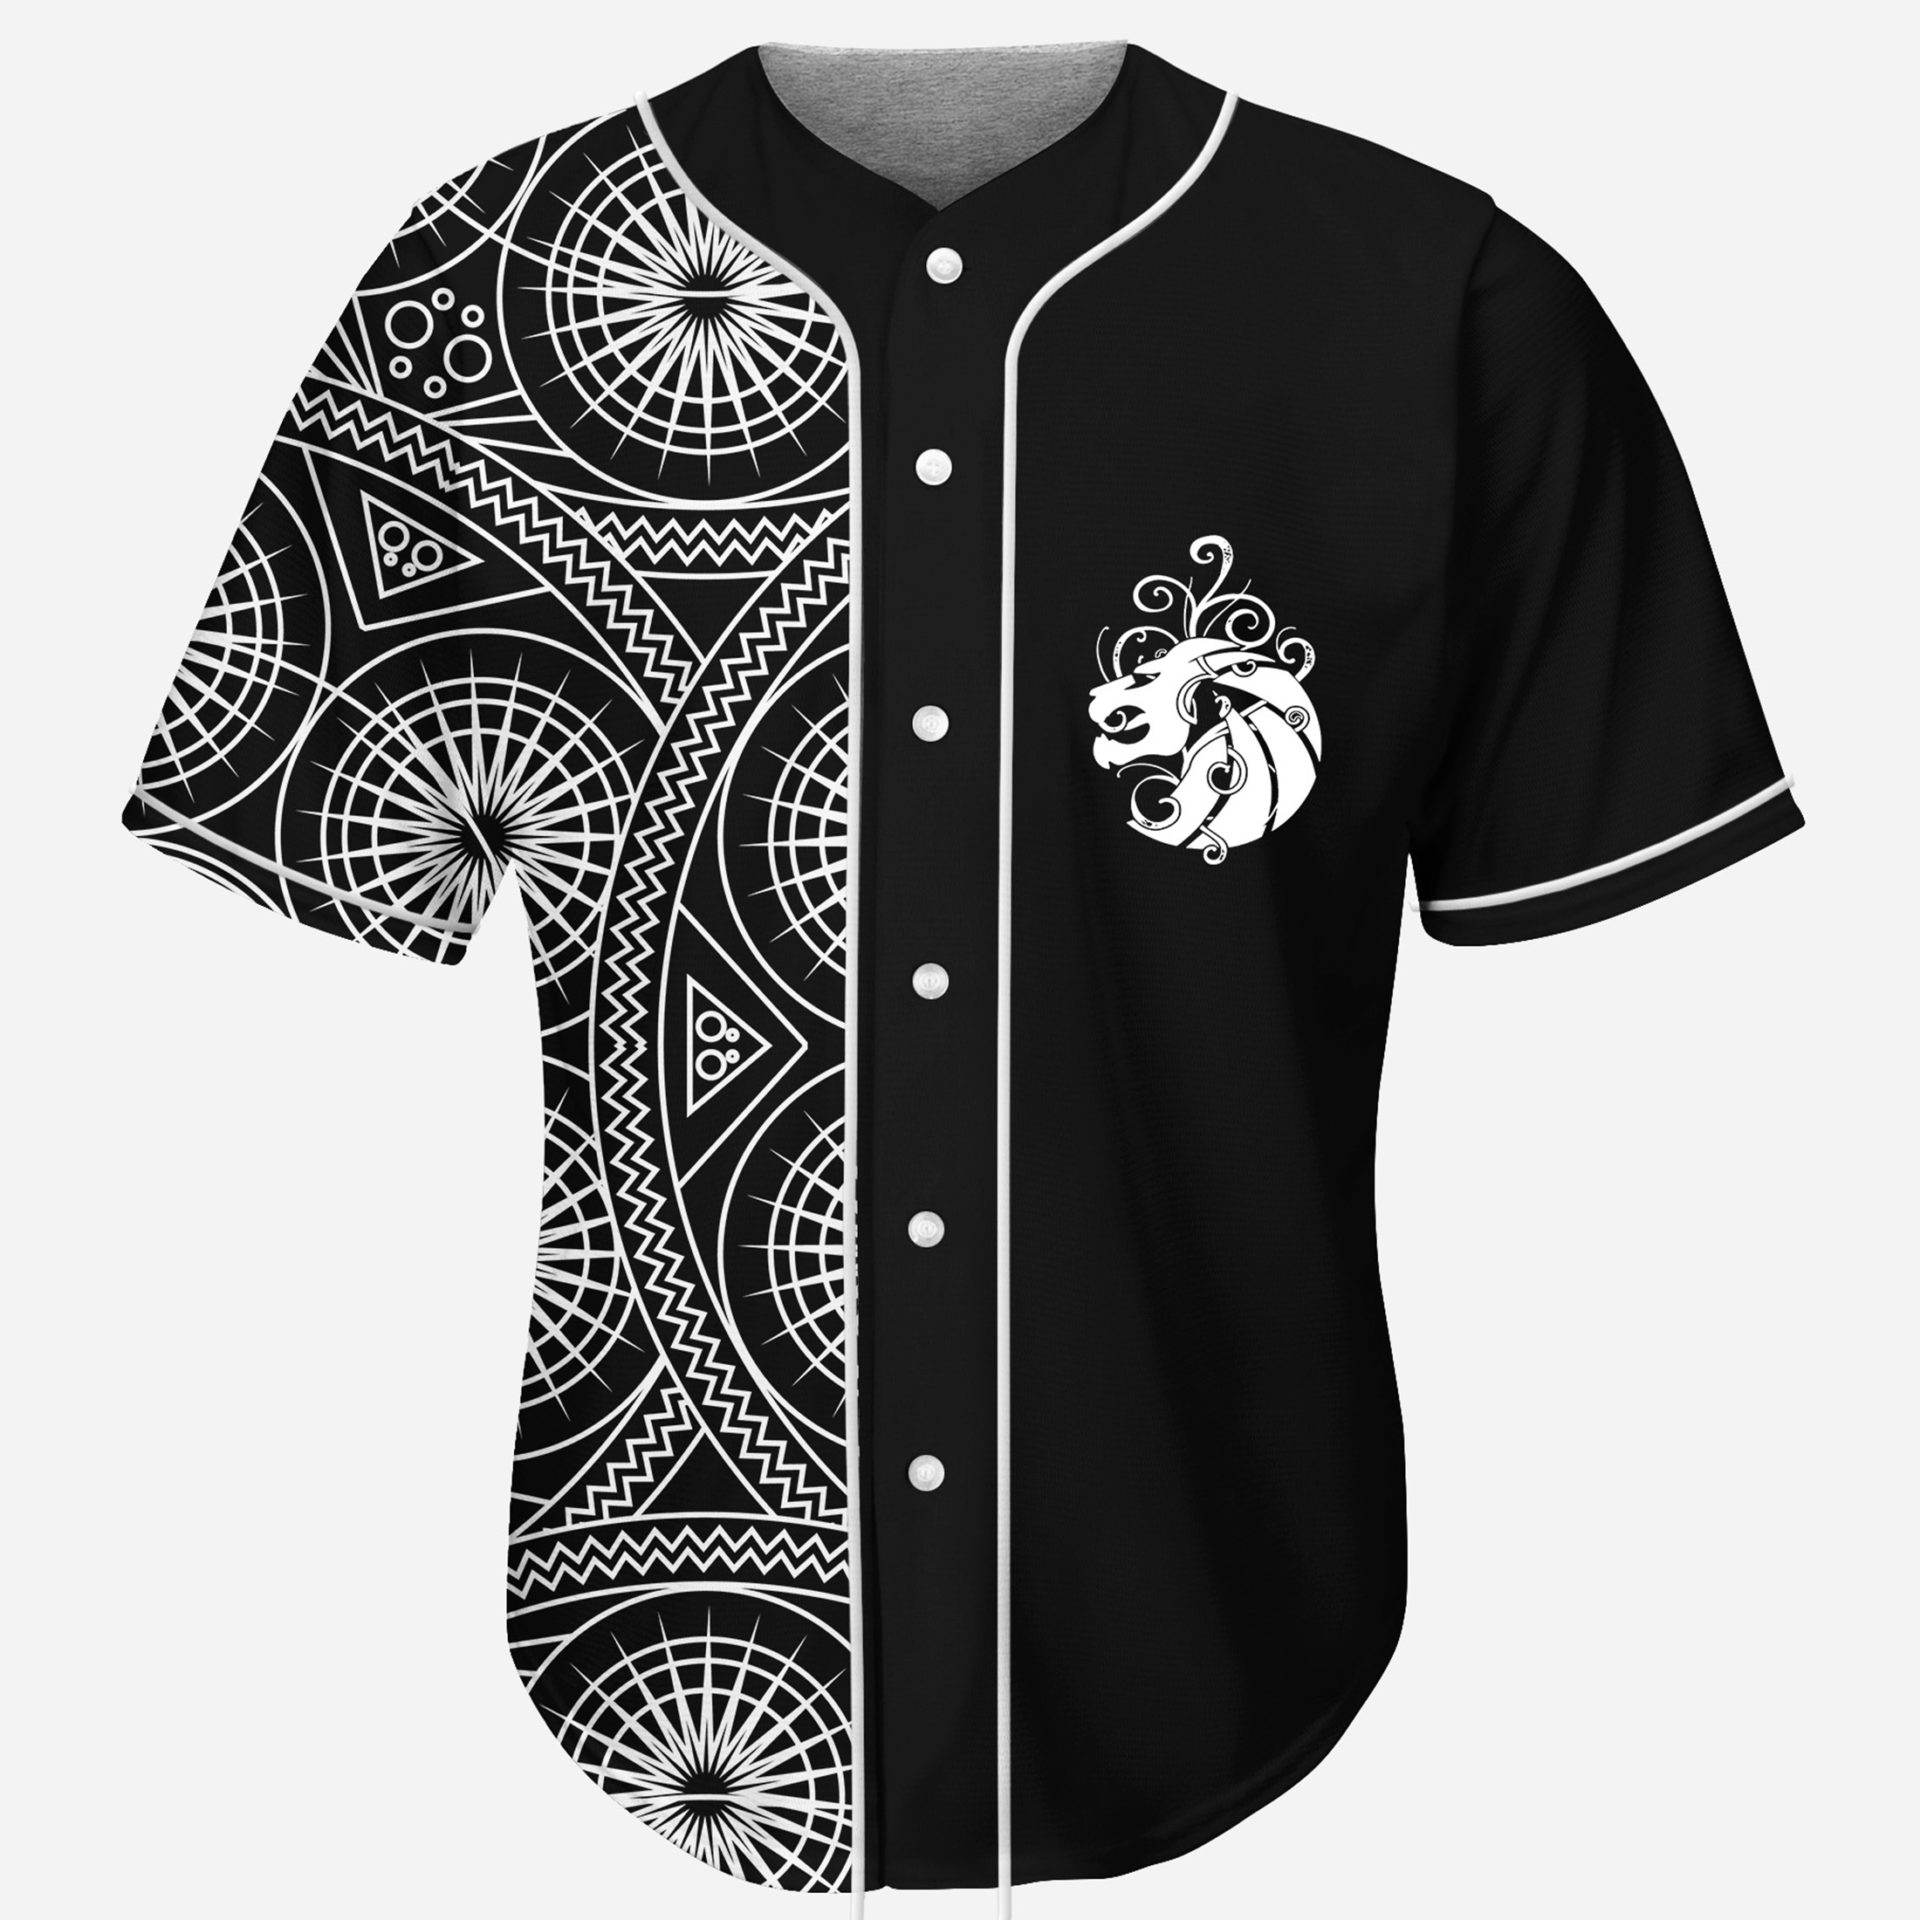 Seven lions geometric split cool design rave baseball jersey for EDM ...